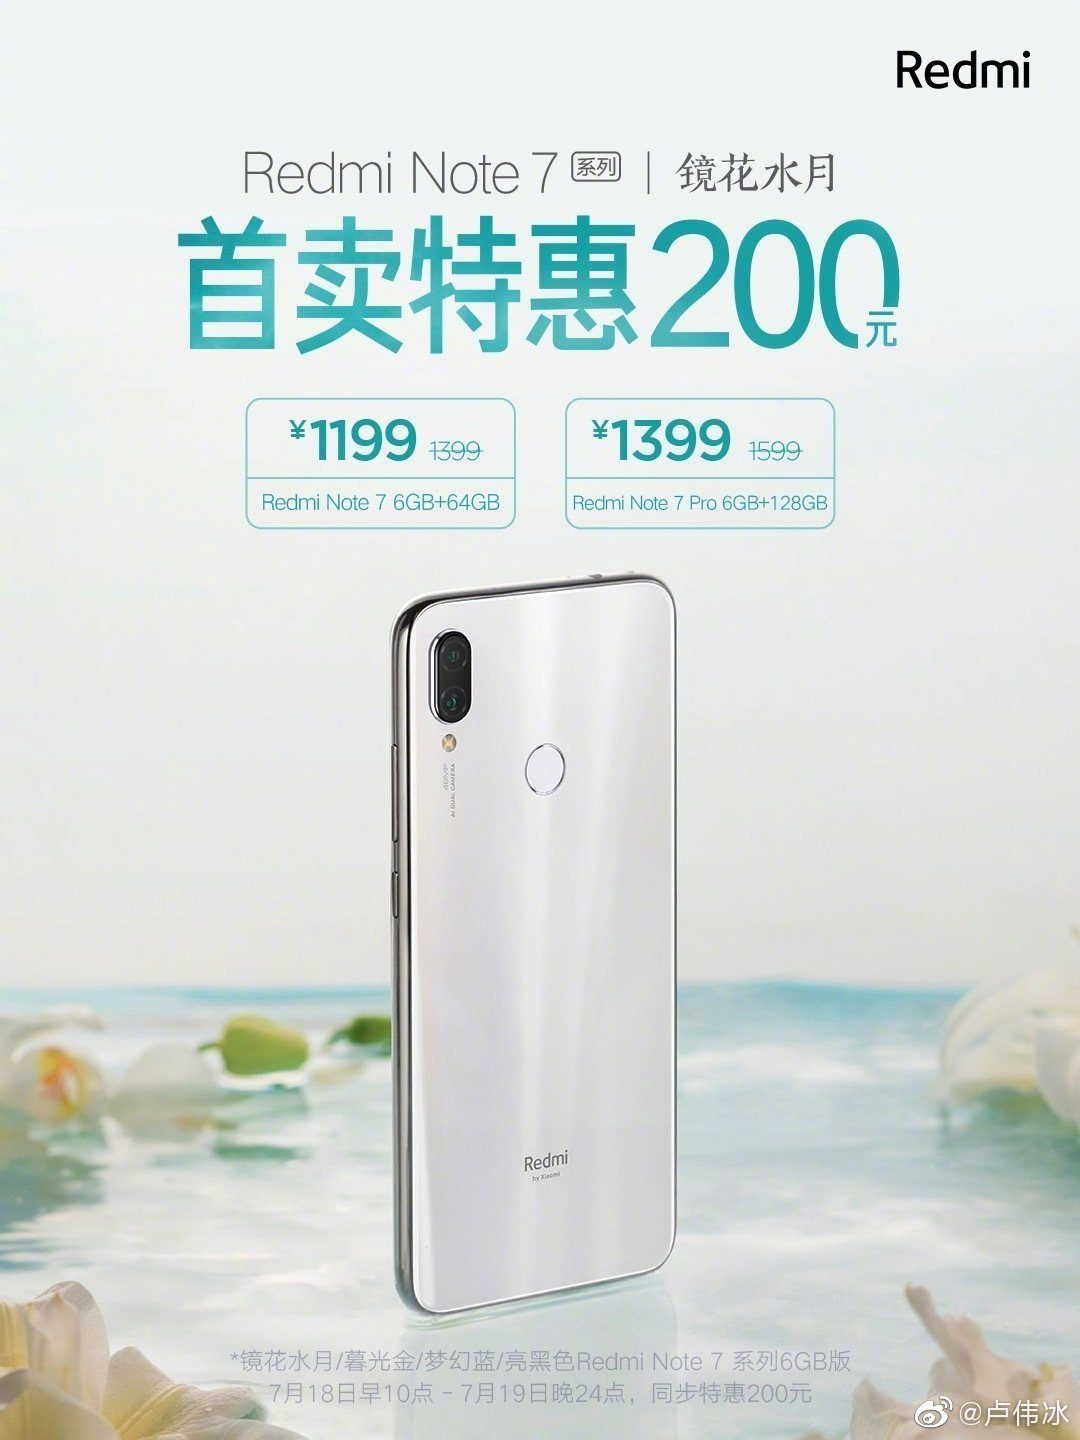 Xiaomi Redmi Note 7 белого цвета